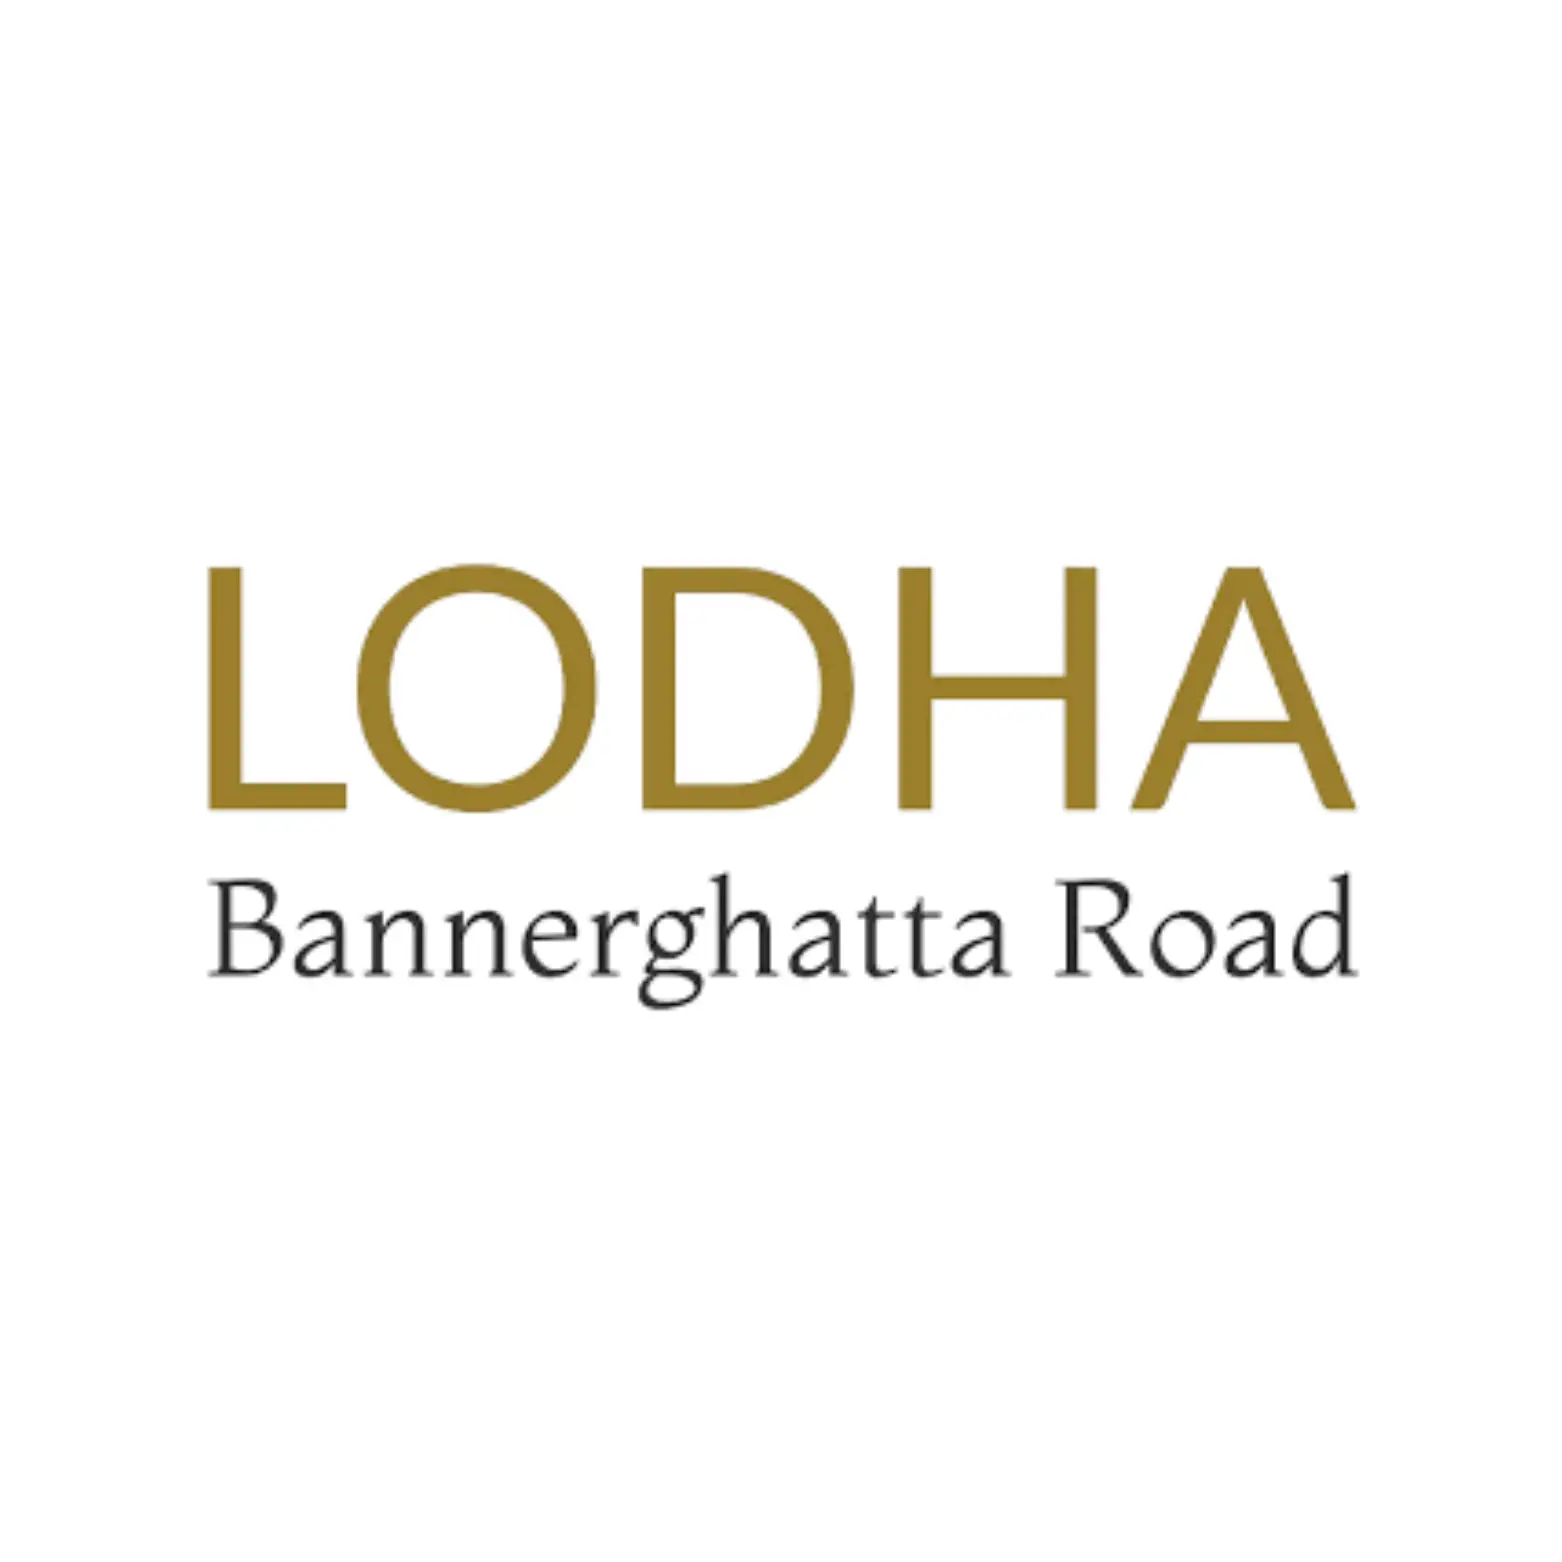 Lodha Bannerghatta